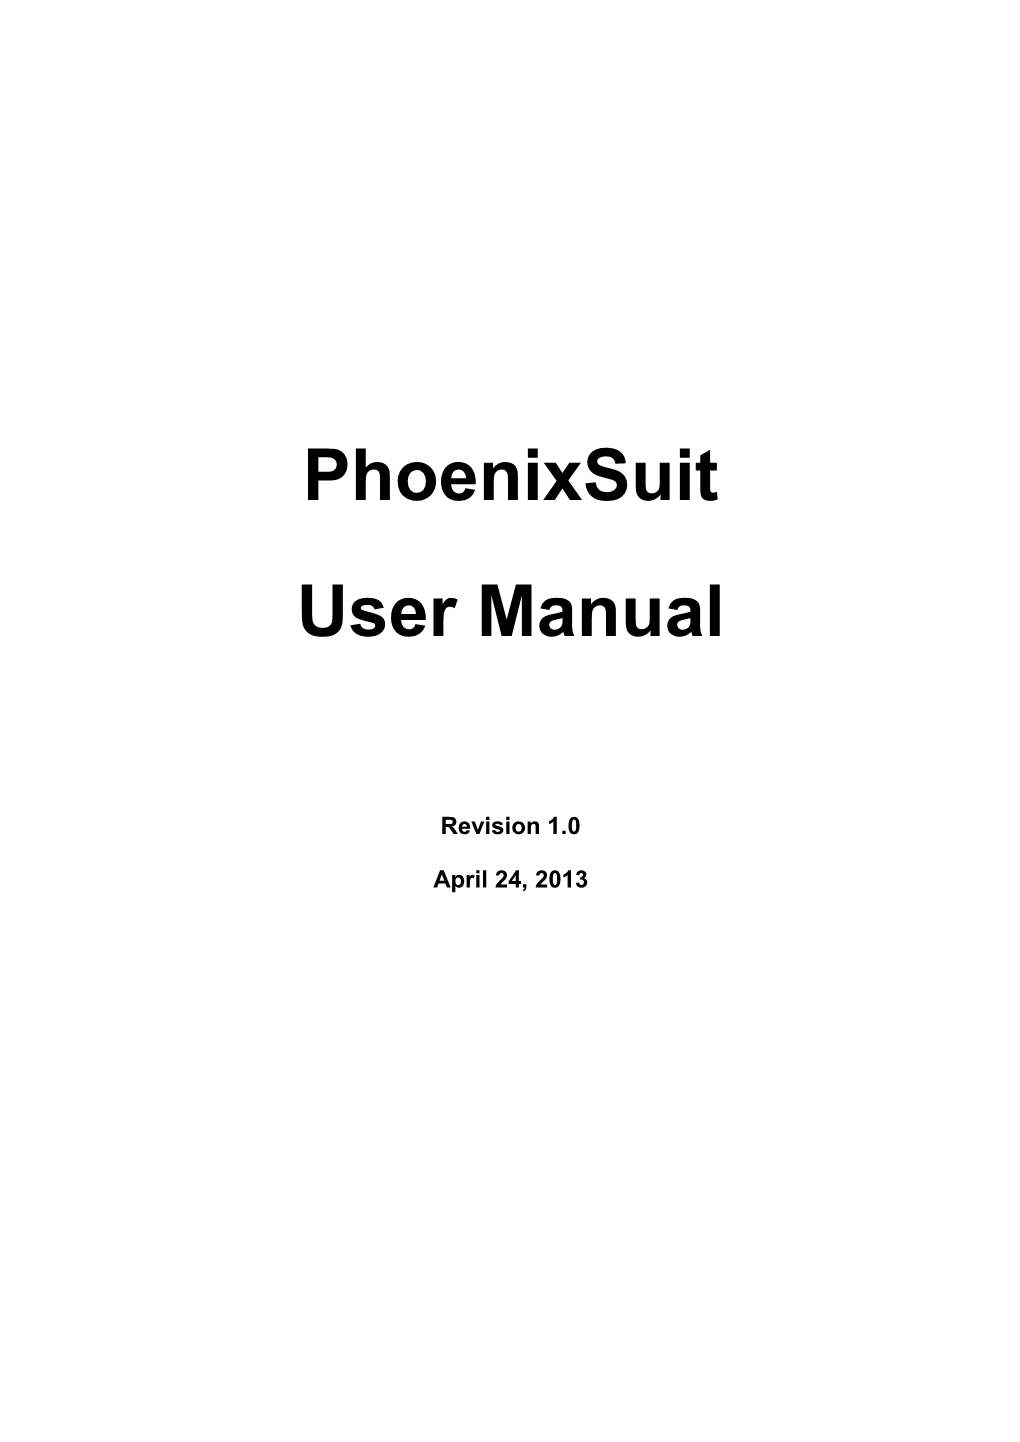 Phoenixsuit User Manual